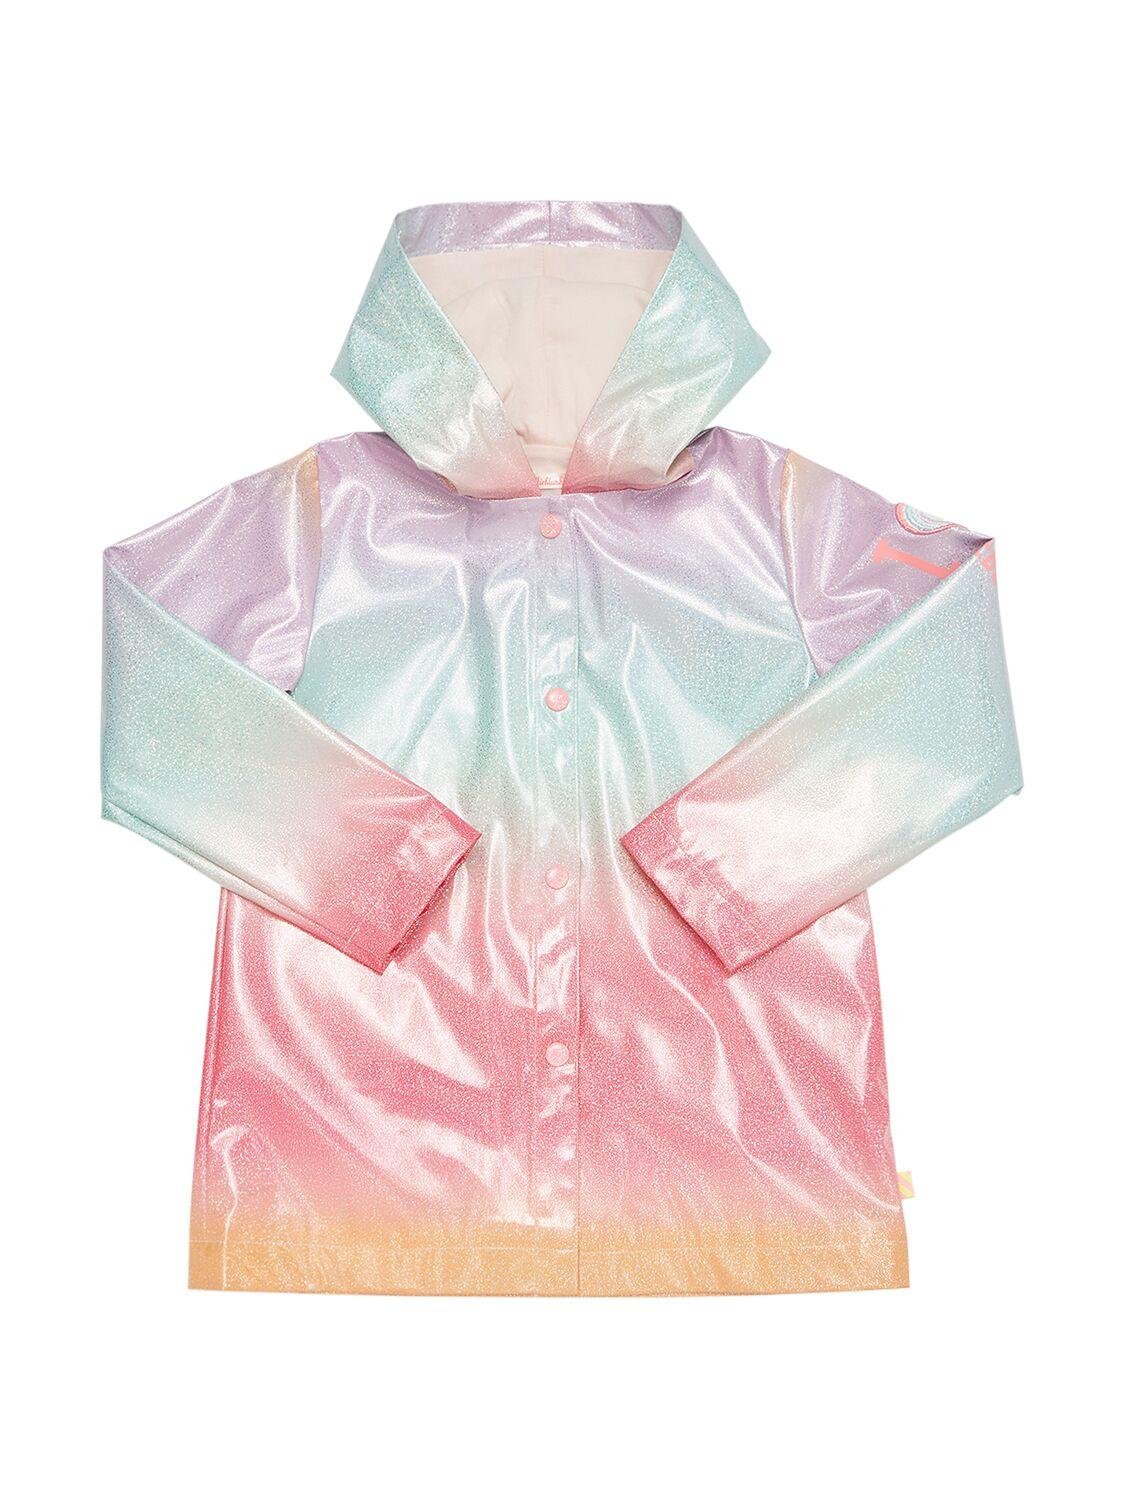 Glittered Printed Nylon Raincoat by BILLIEBLUSH